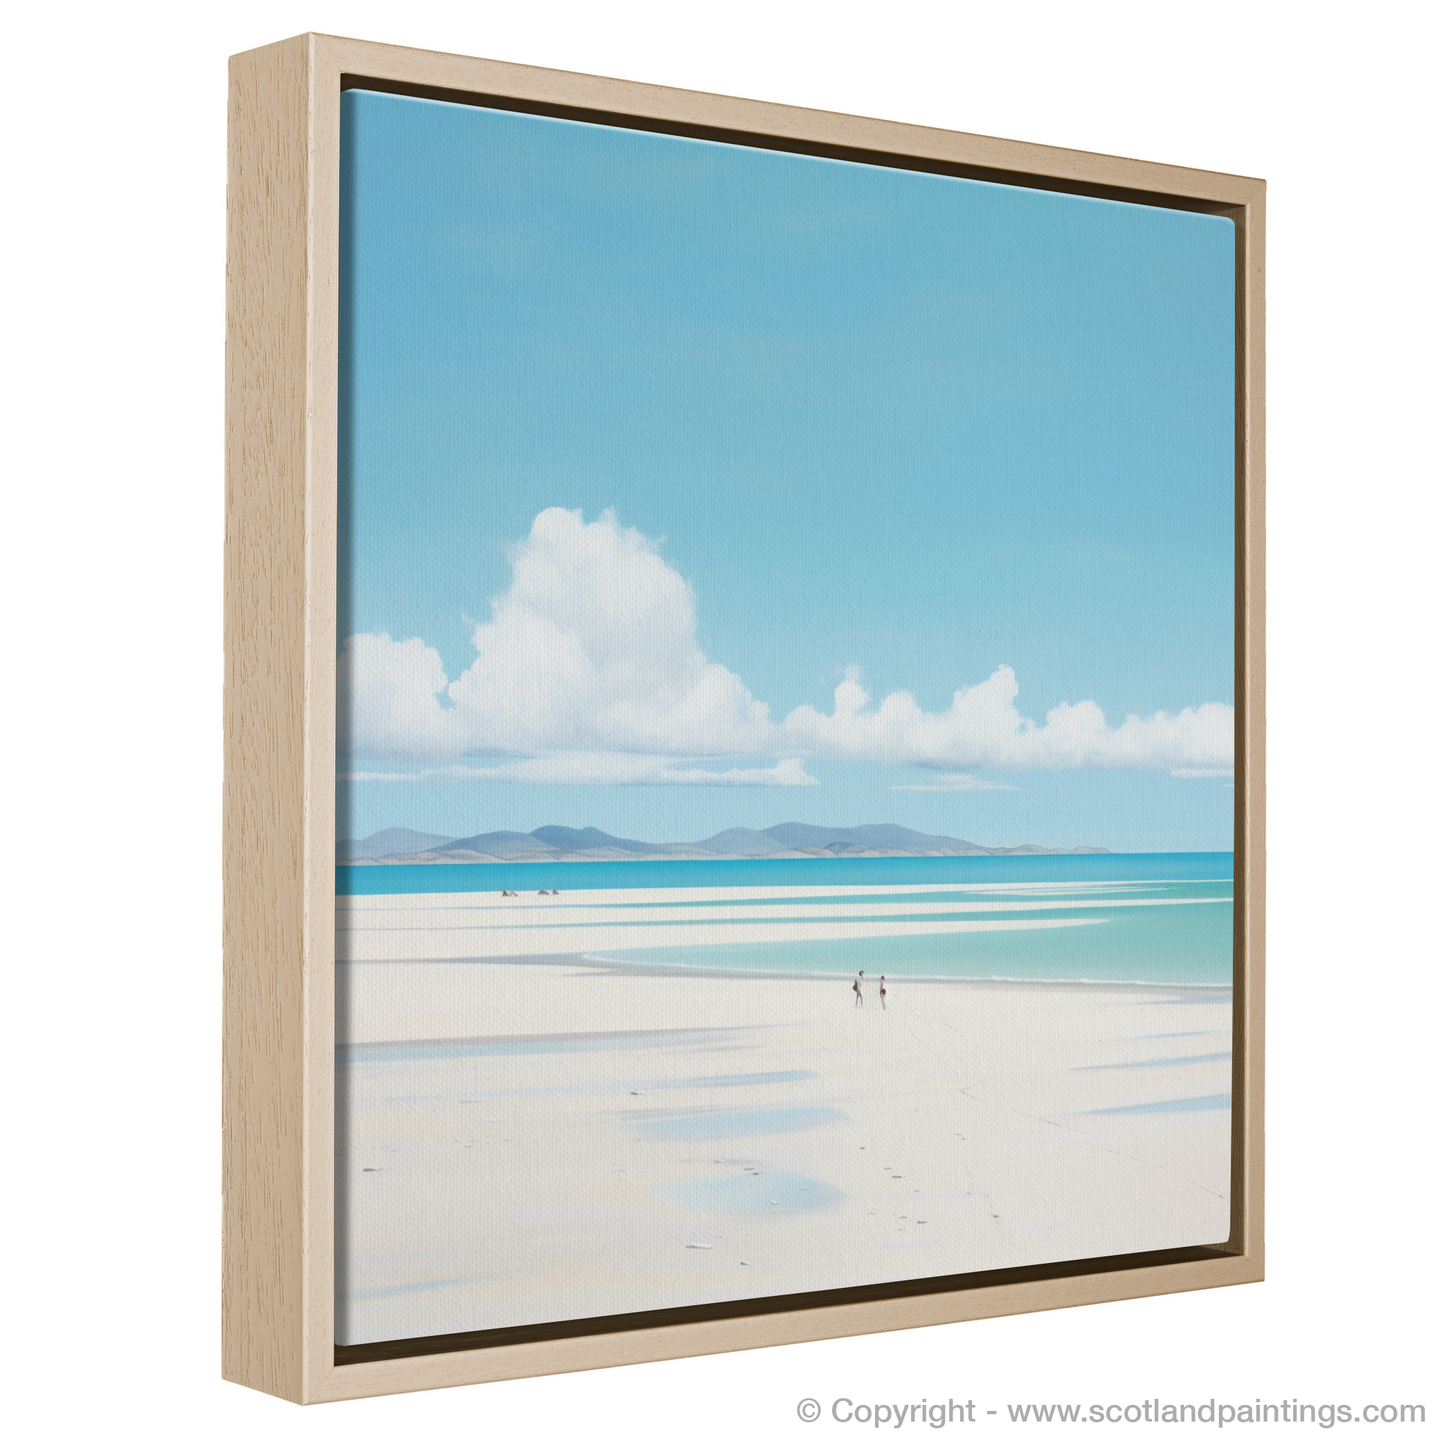 Painting and Art Print of Luskentyre Beach, Isle of Harris entitled "Serene Horizons: Luskentyre Beach Minimalism".